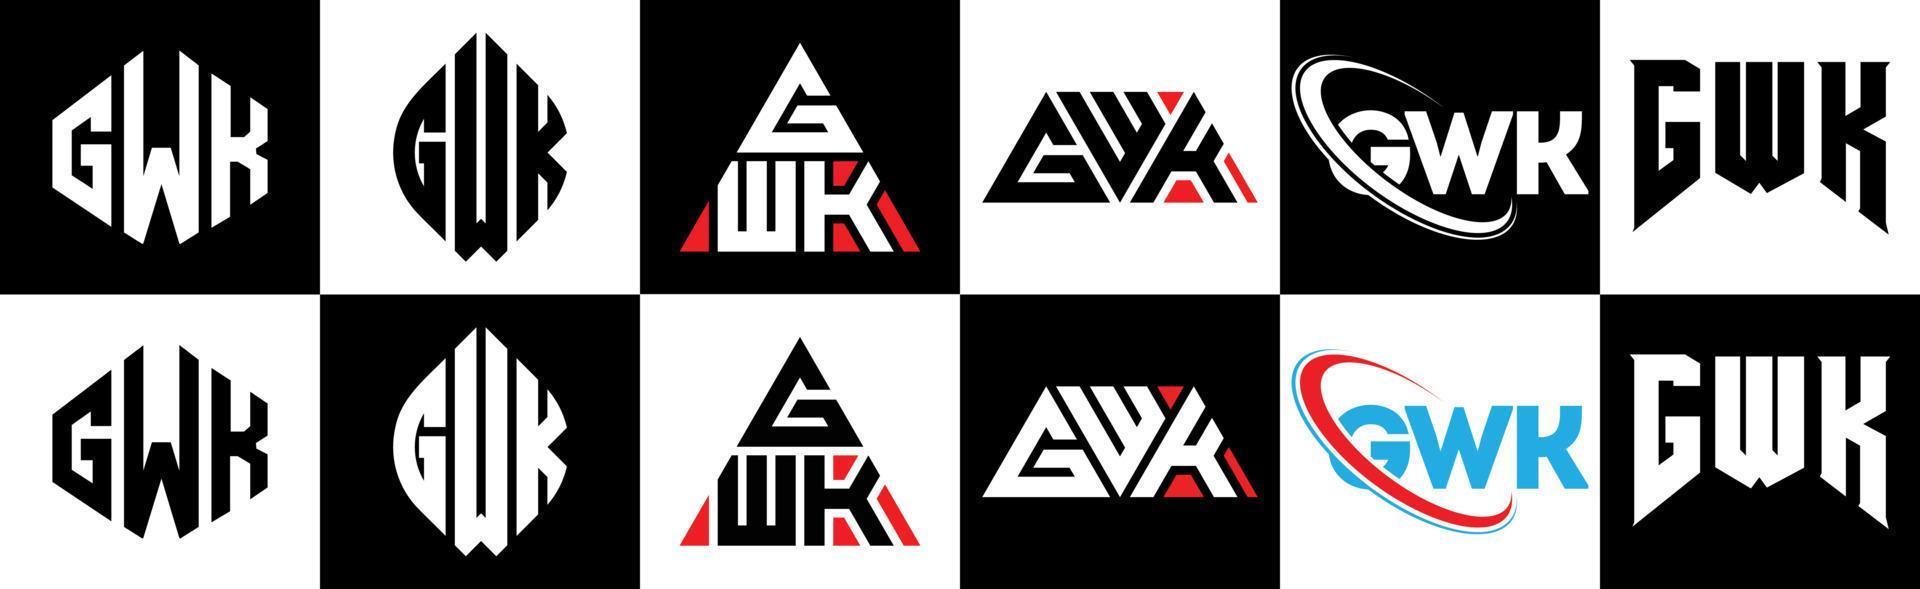 design de logotipo de carta gwk em seis estilos. polígono gwk, círculo, triângulo, hexágono, estilo plano e simples com logotipo de carta de variação de cor preto e branco definido em uma prancheta. gwk logotipo minimalista e clássico vetor